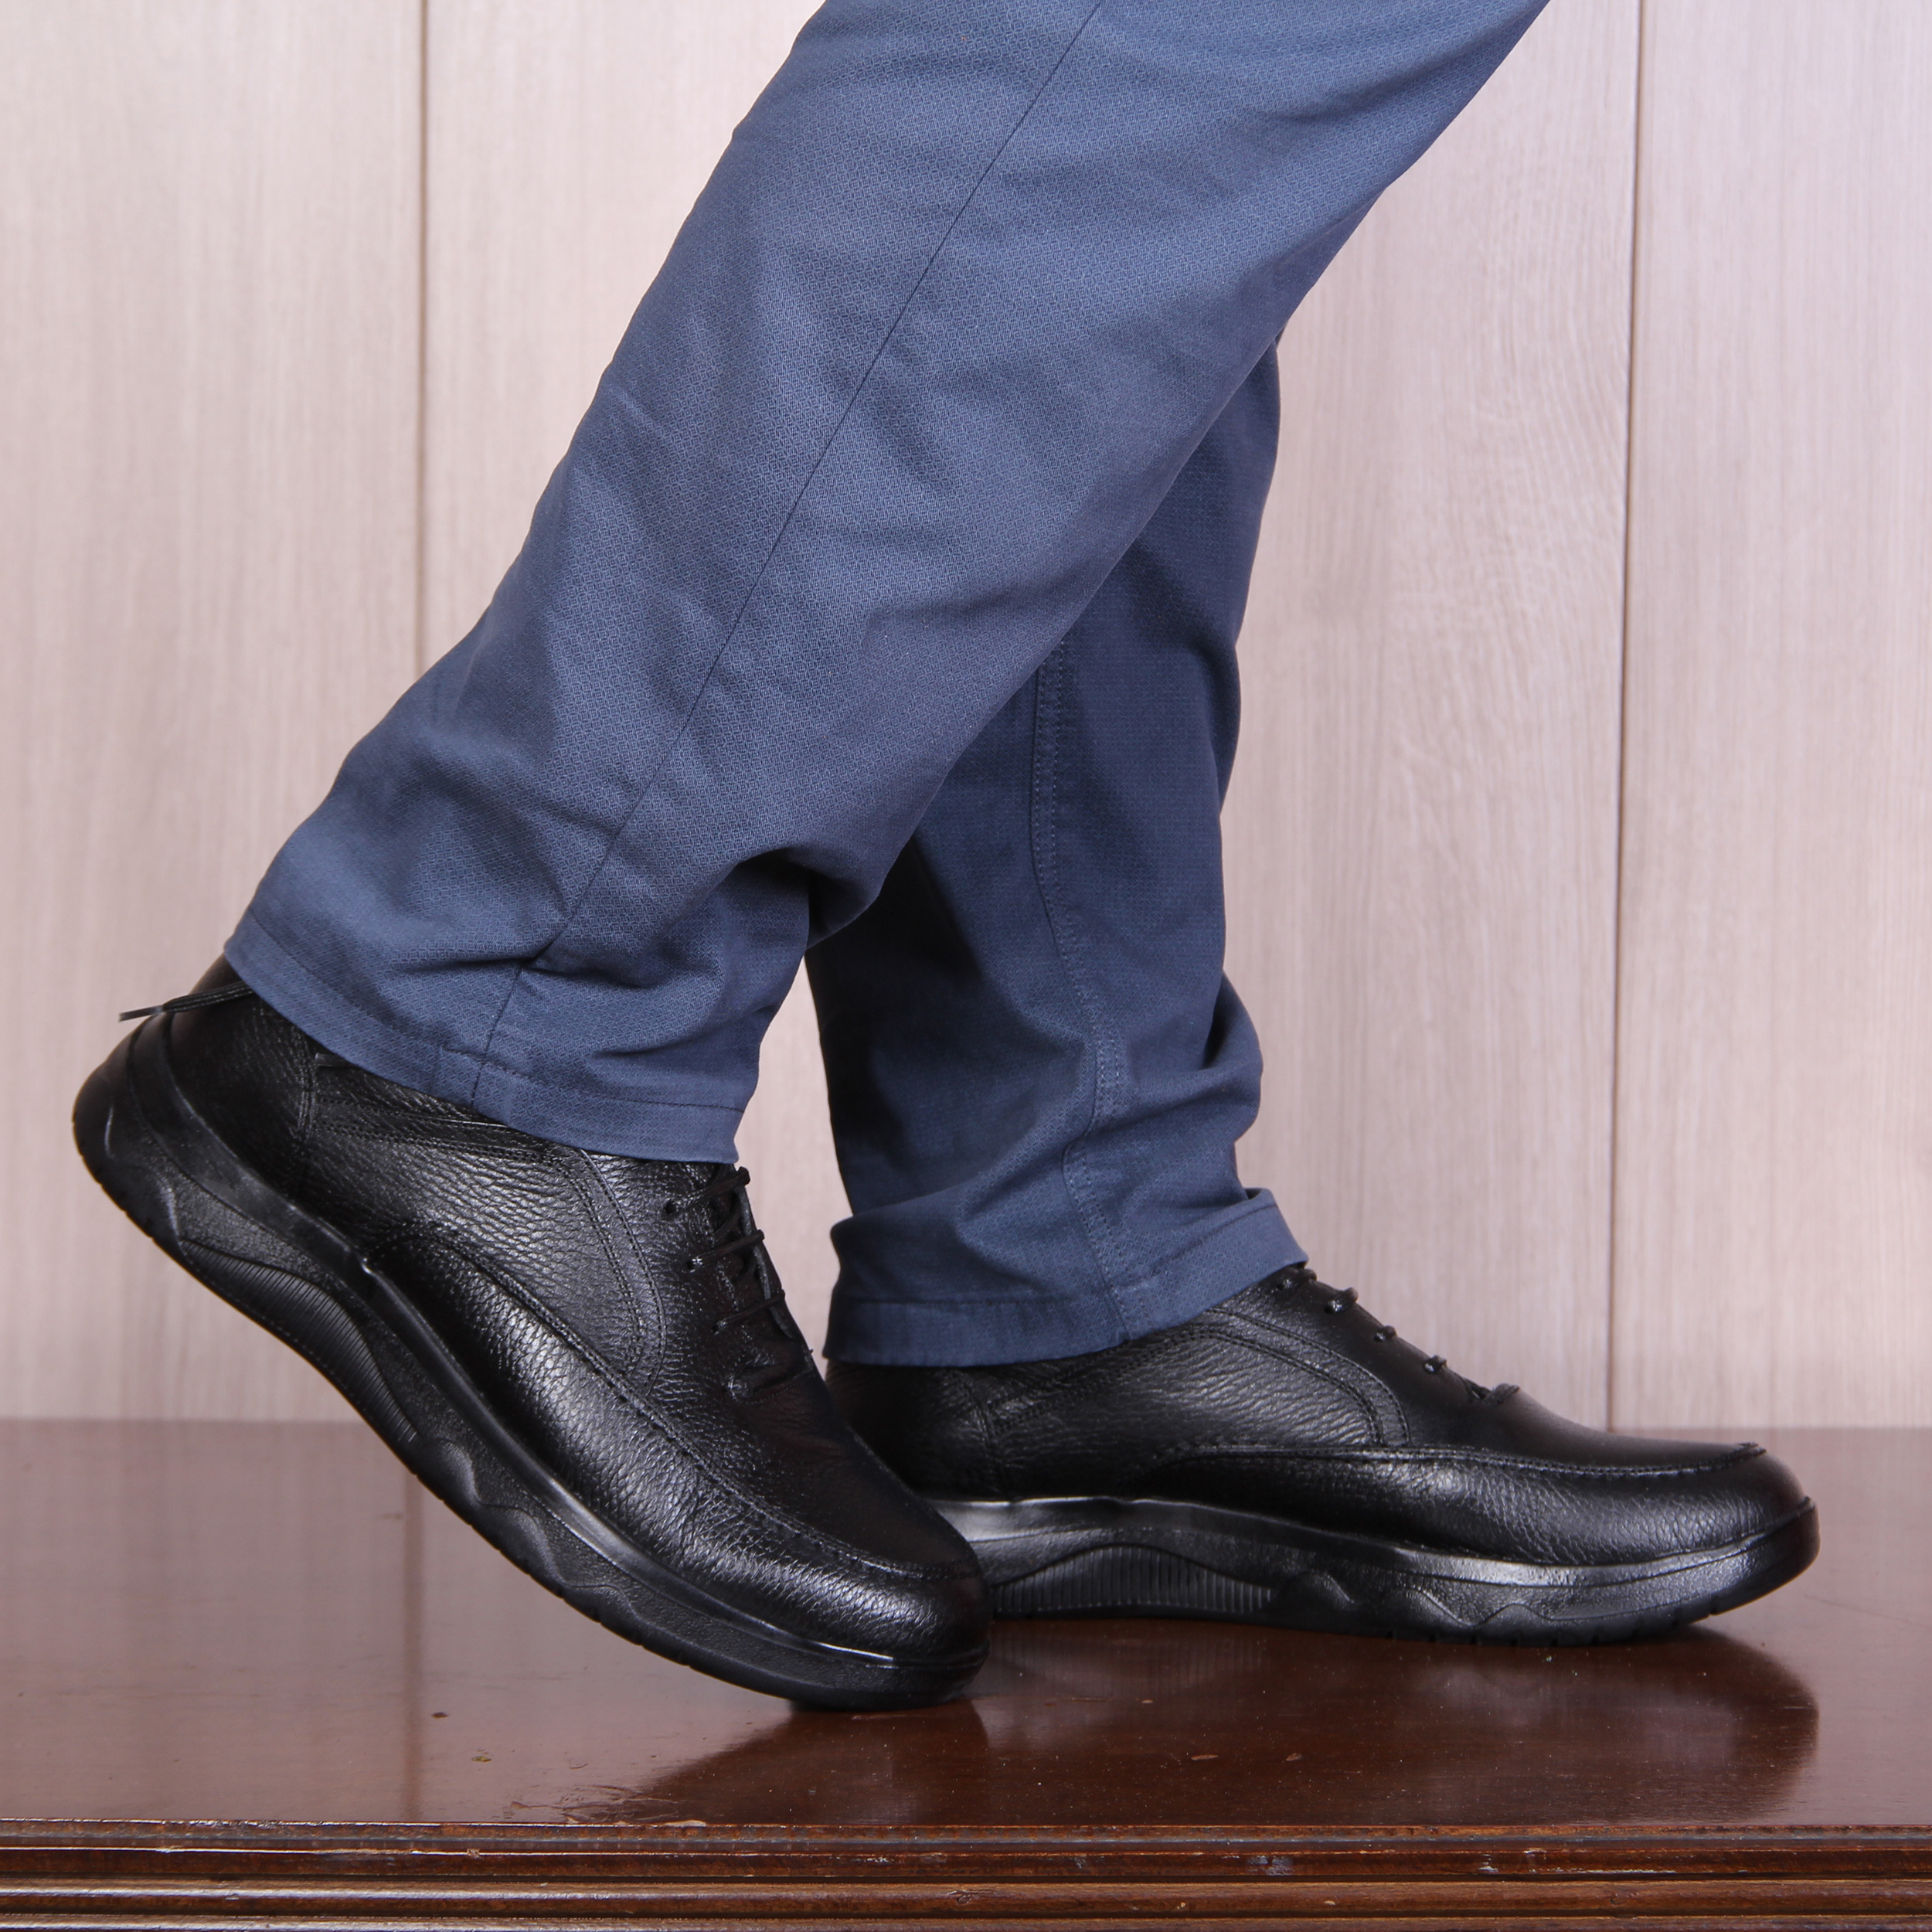 SHAHRECHARM leather men's casual shoes , F6056-1 Model